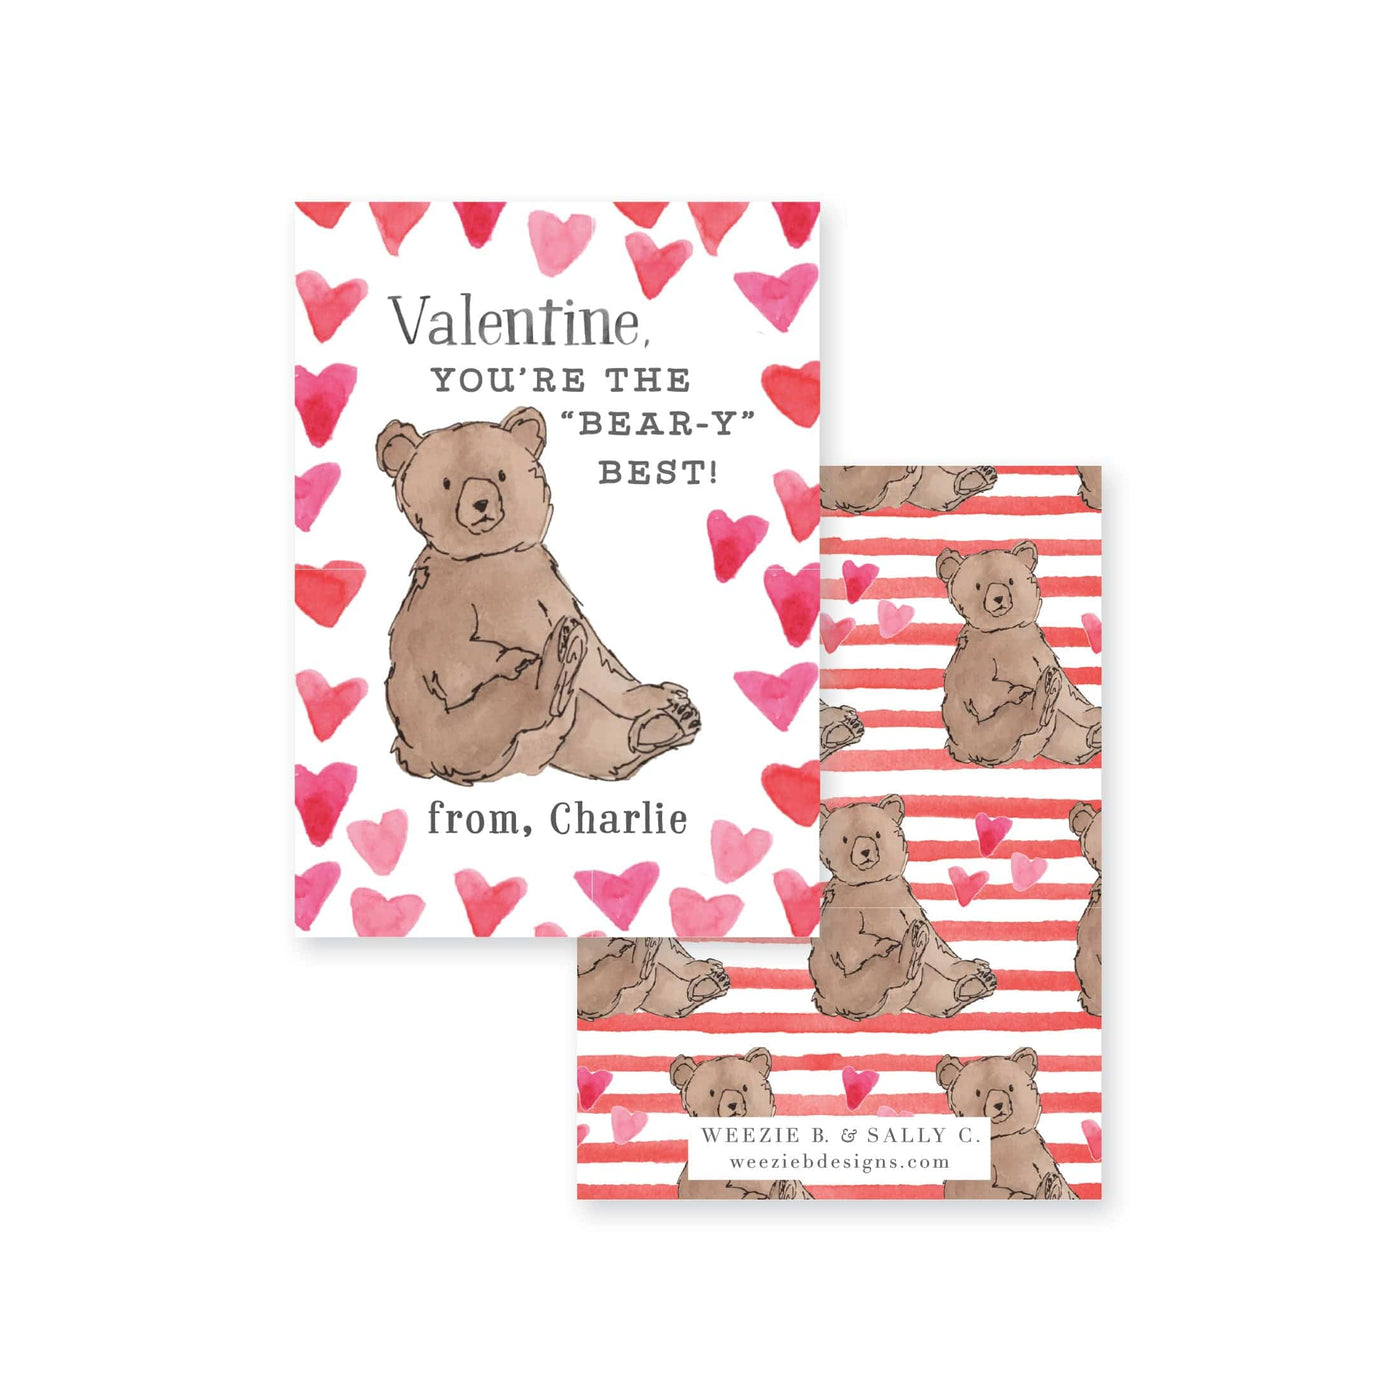 Bear-y Best Valentines